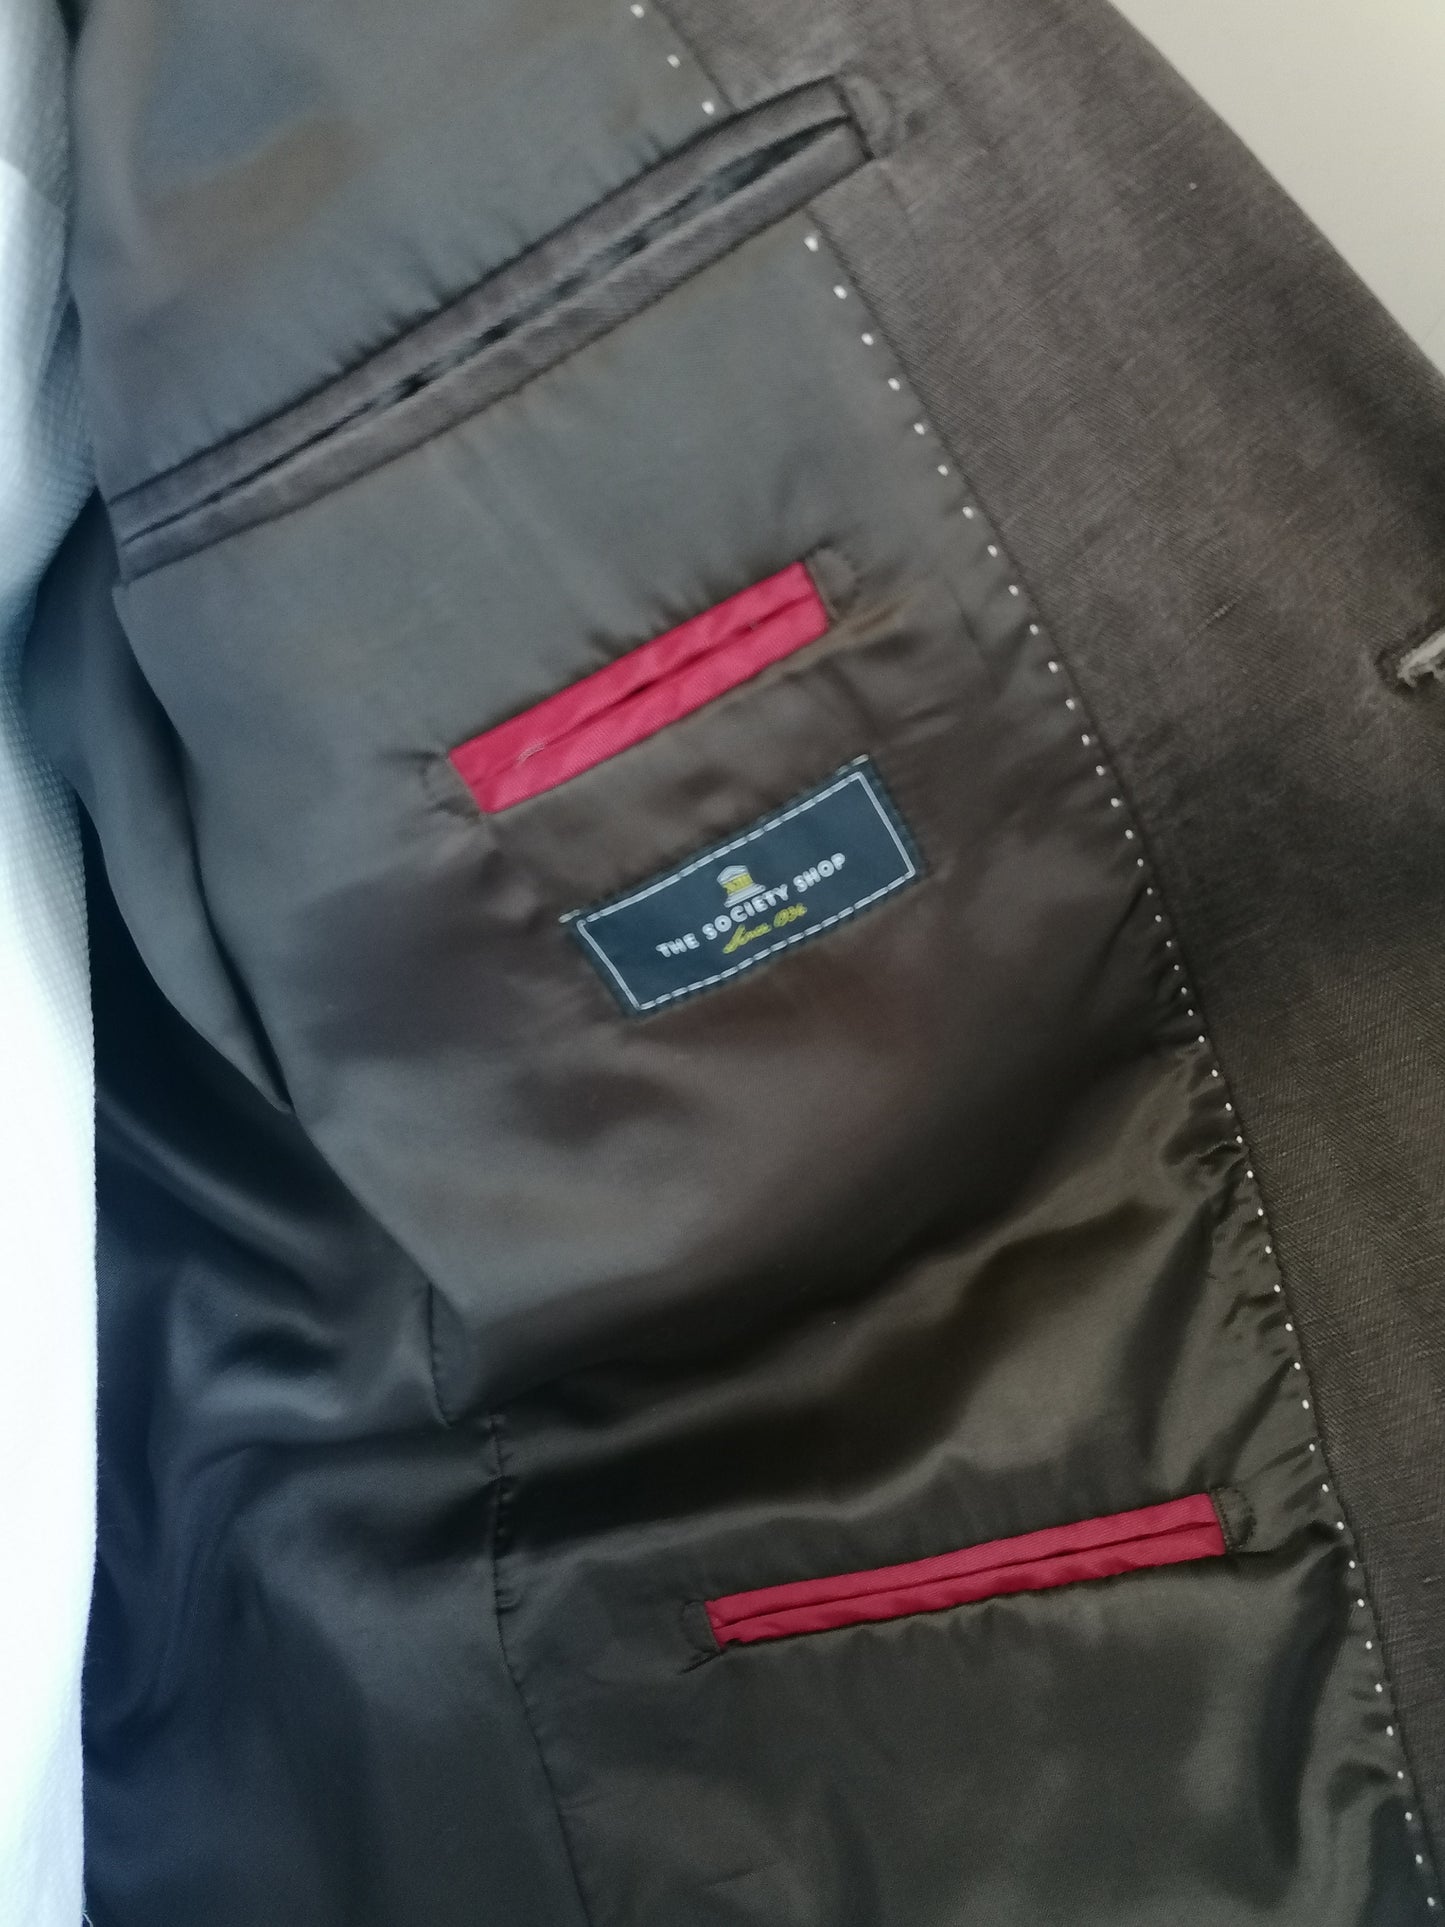 Soci3ty jacket. Dark brown herringbone motif. Size 52 / L. "88 or 100"